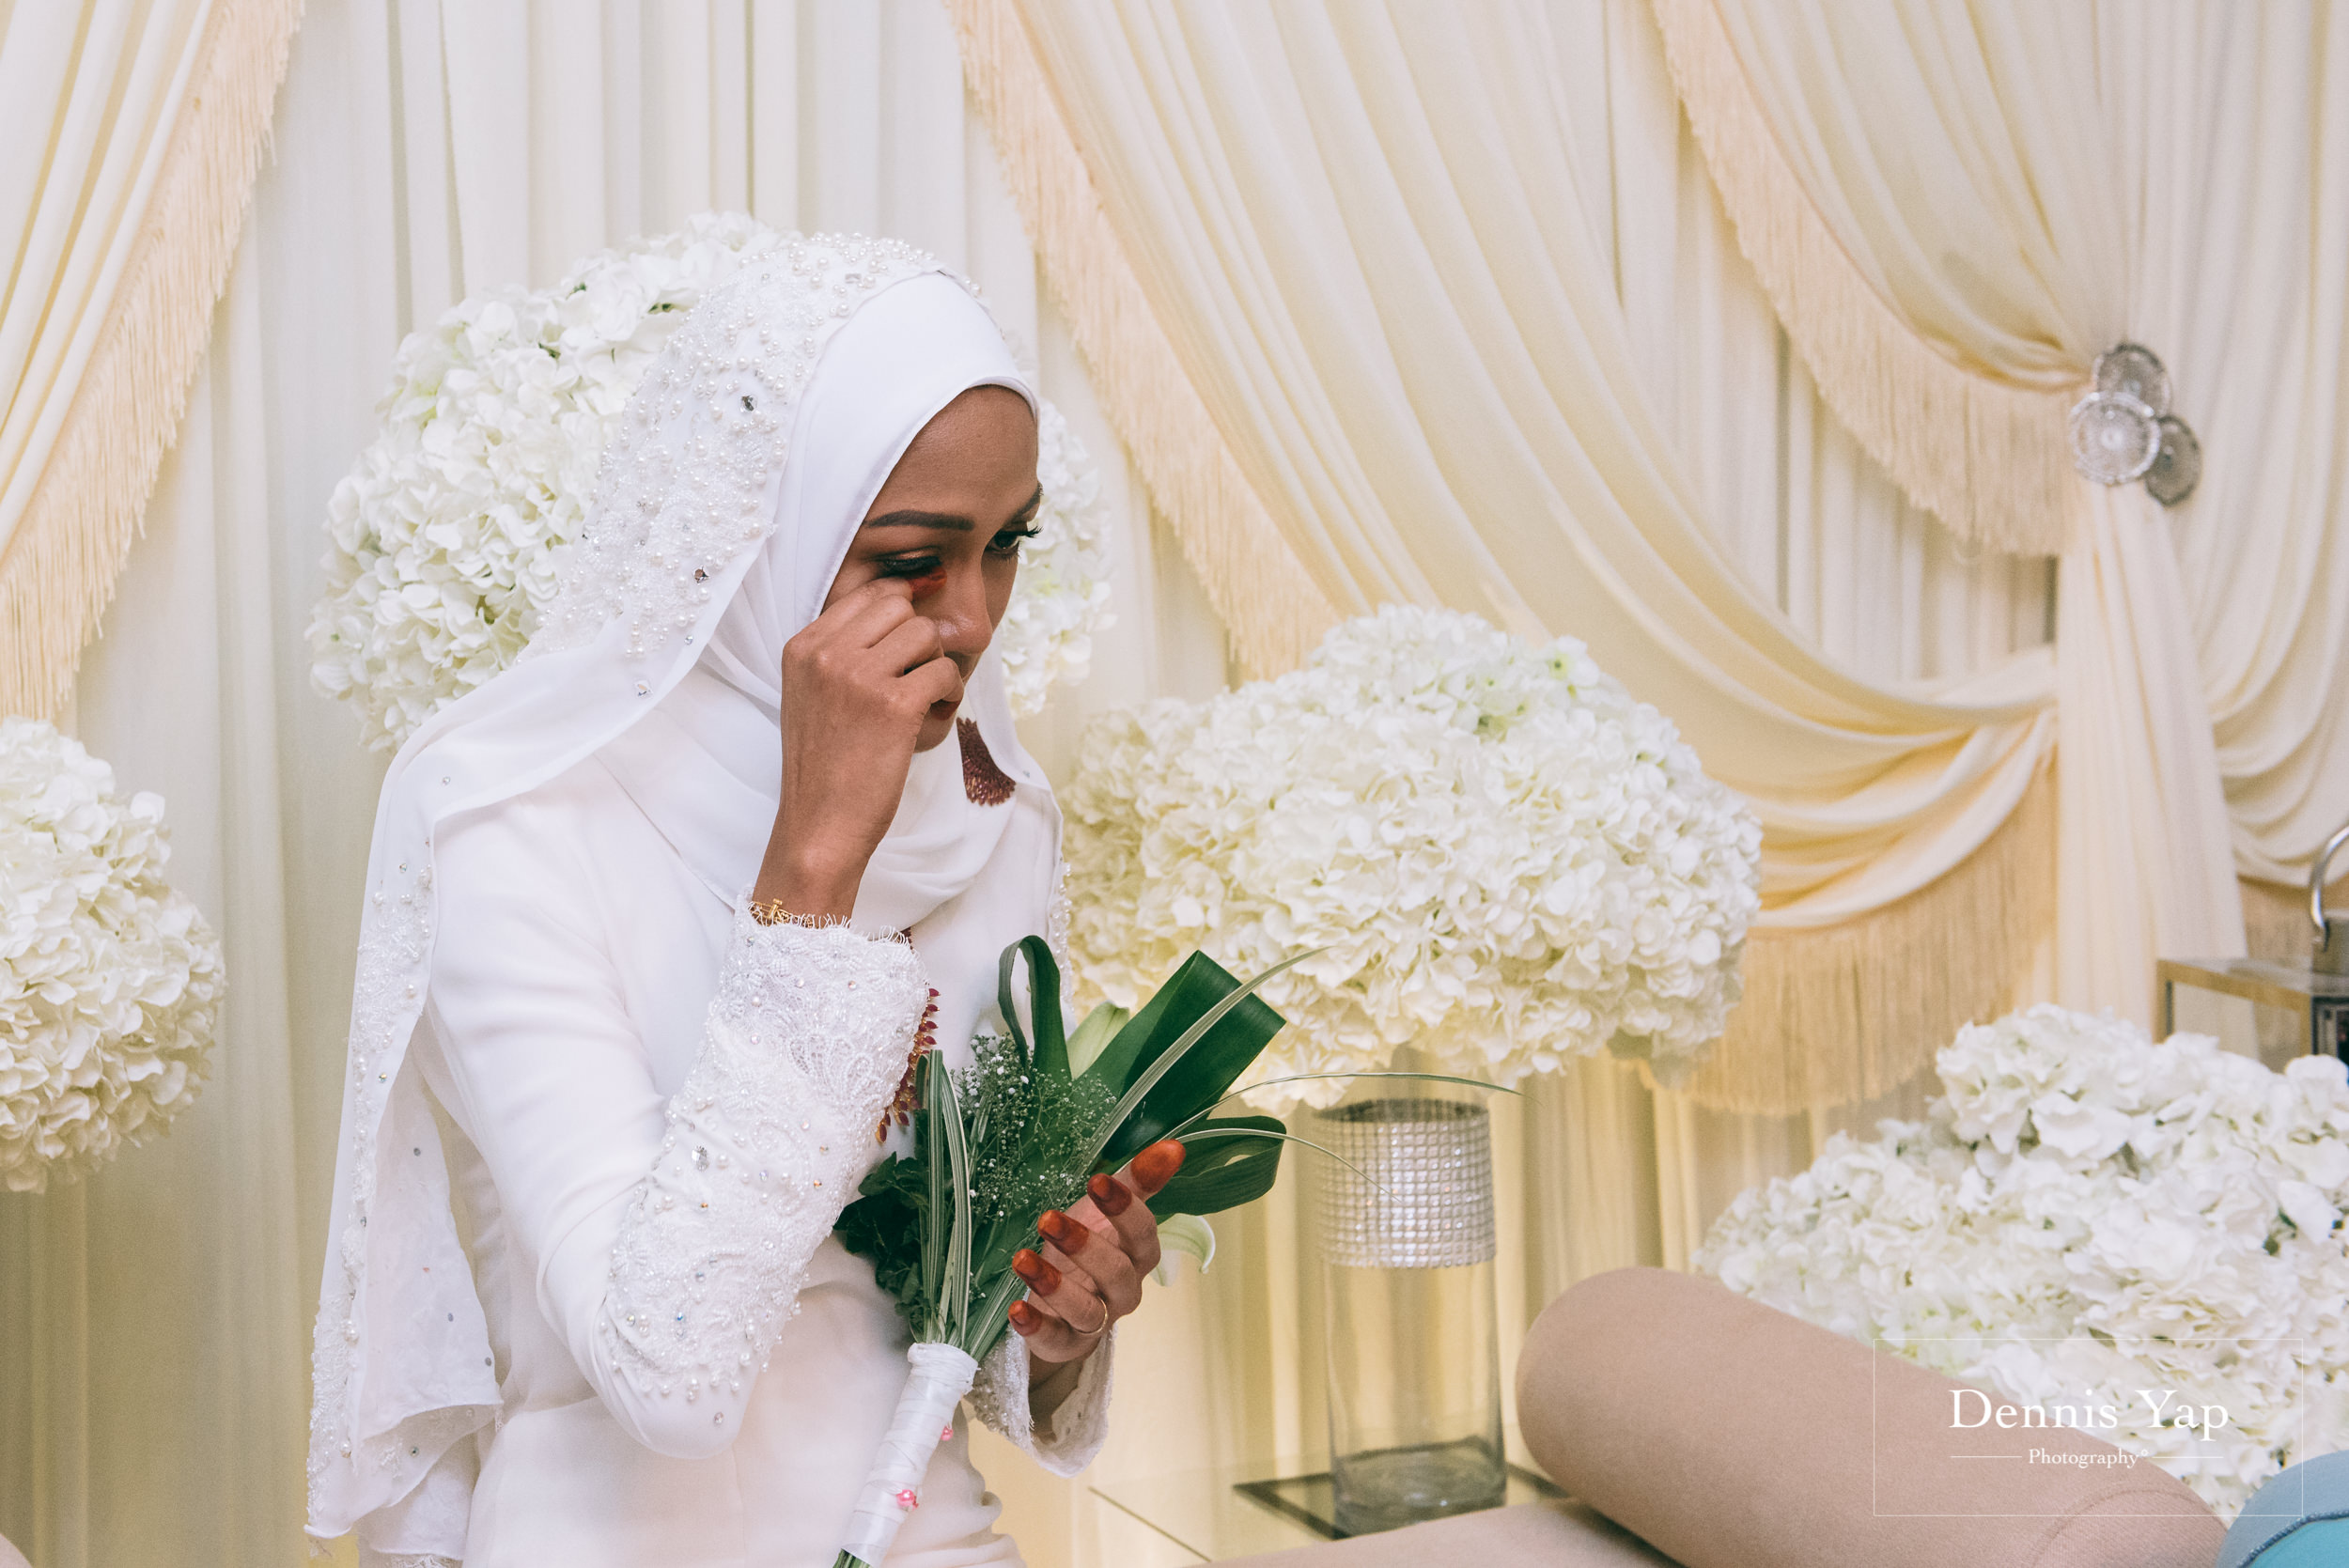 zarif hanalili malay wedding ceremony dennis yap photography-16.jpg